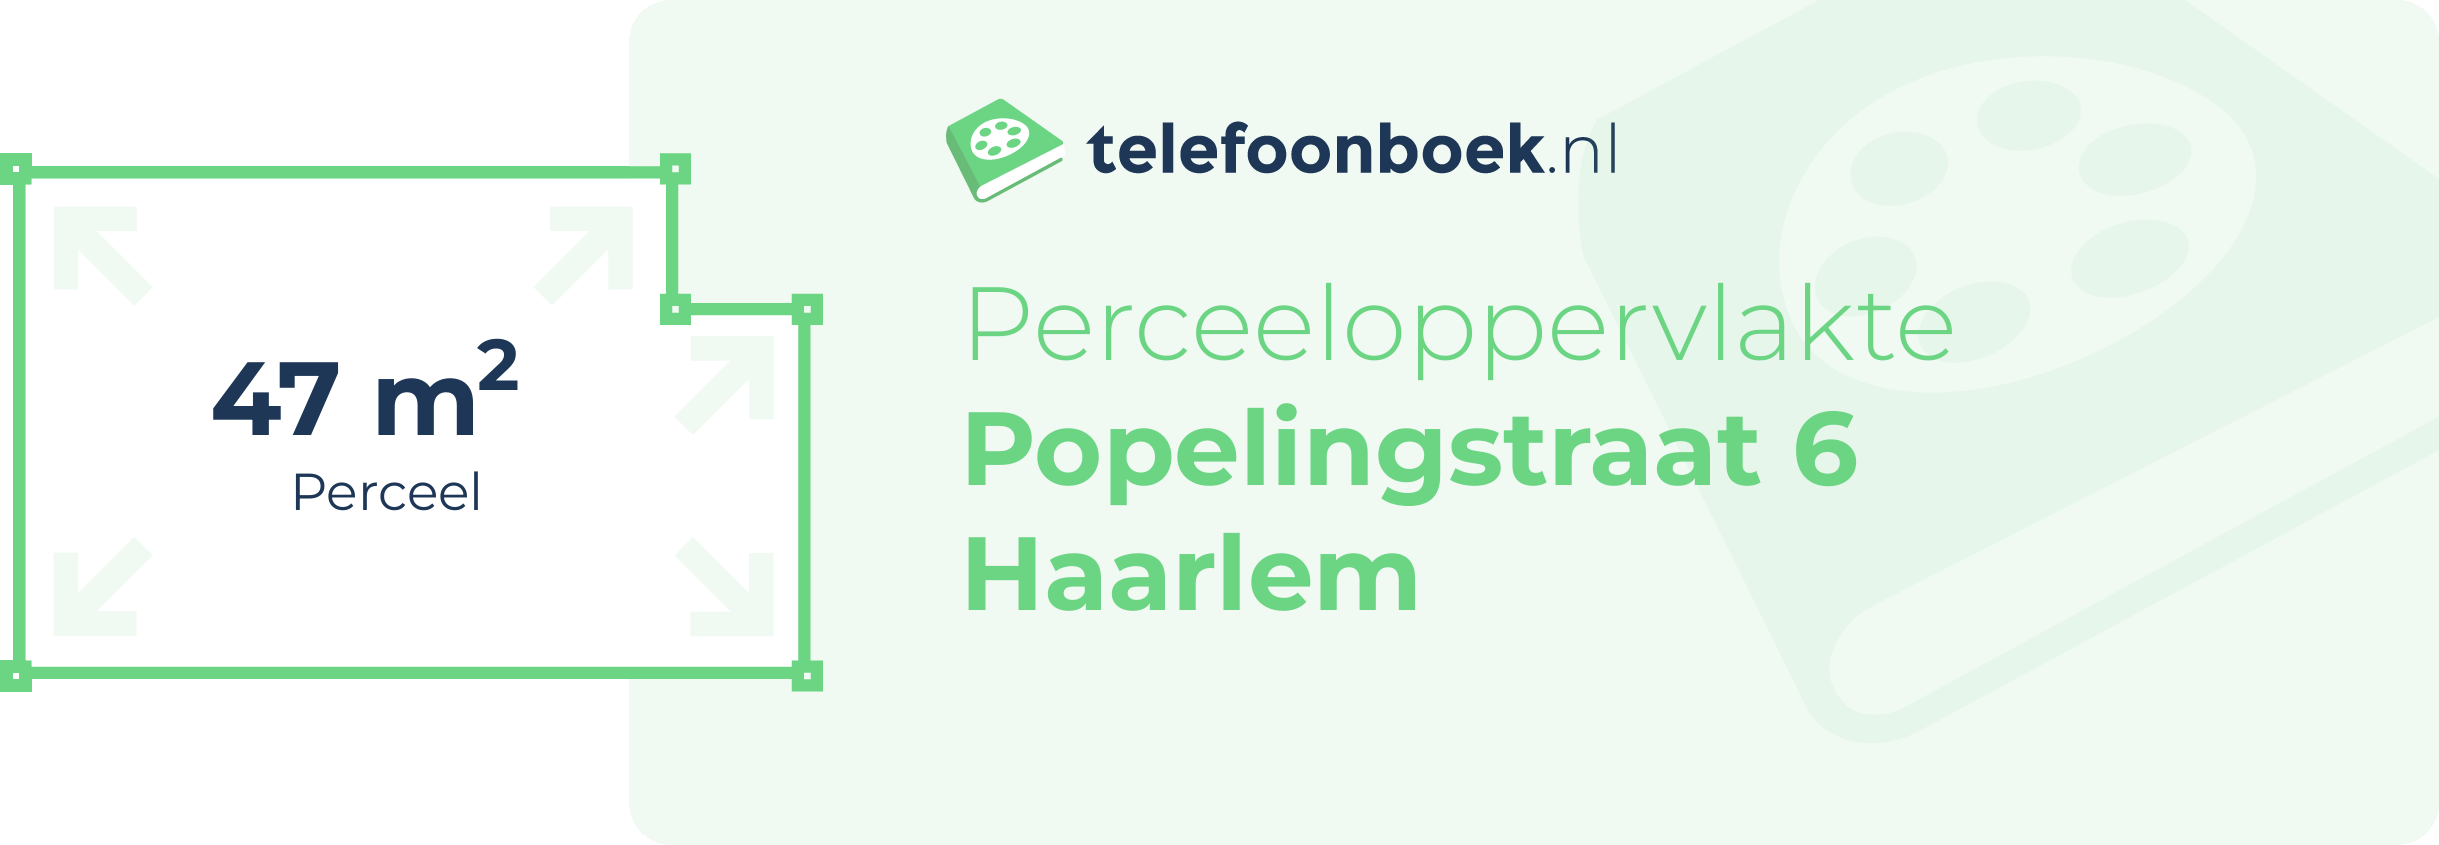 Perceeloppervlakte Popelingstraat 6 Haarlem